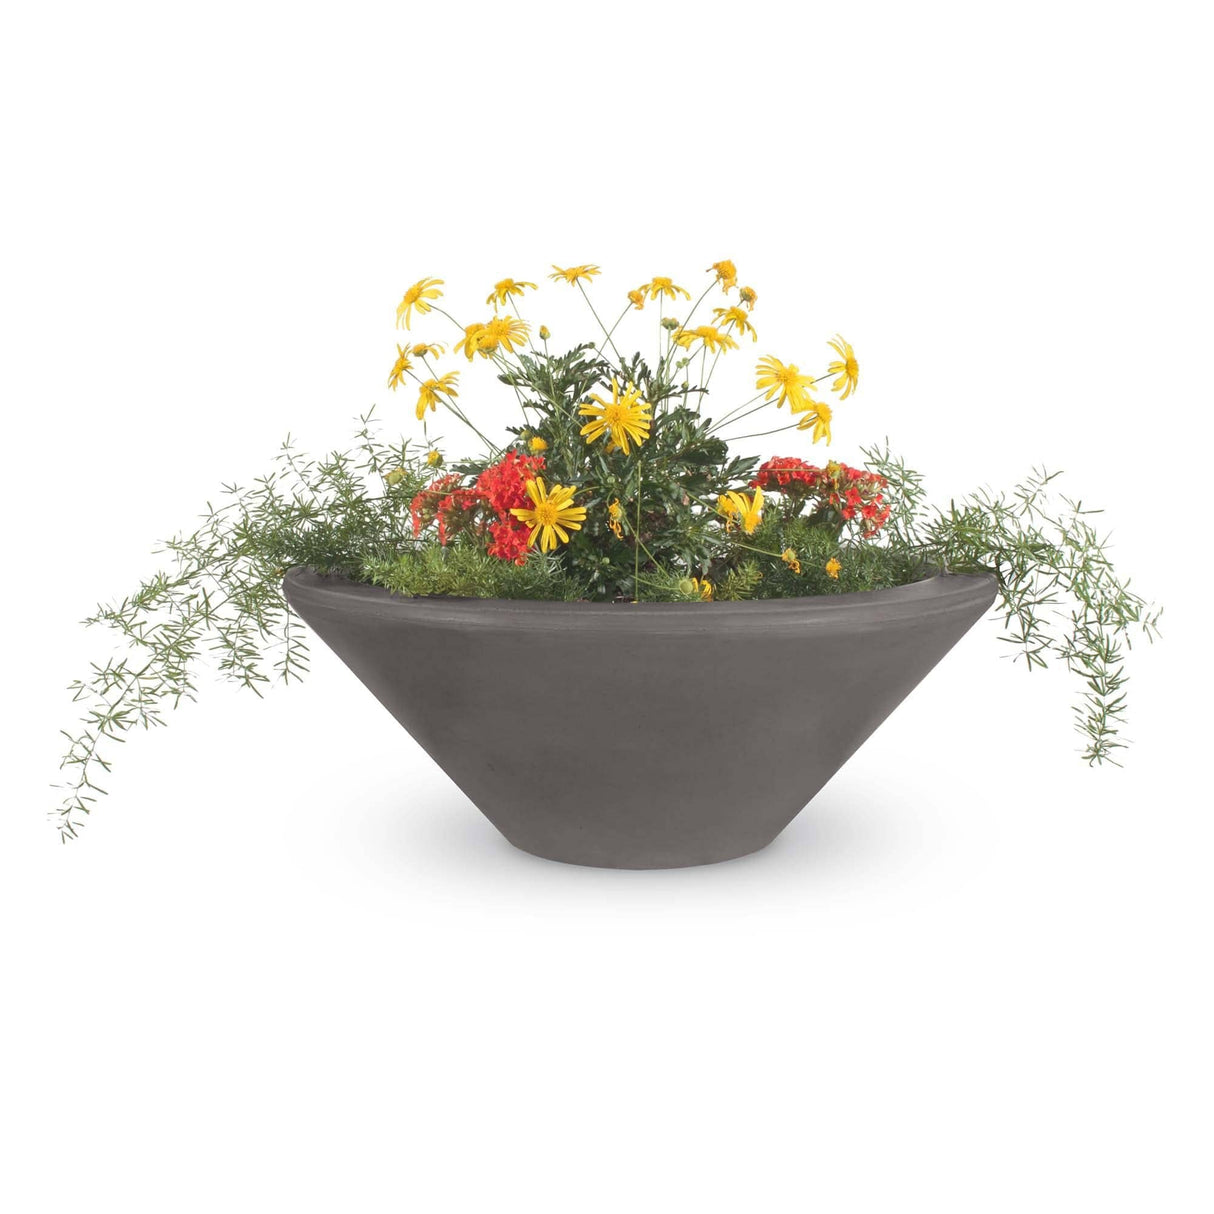 The Outdoor Plus Cazo Planter Bowl - Concrete